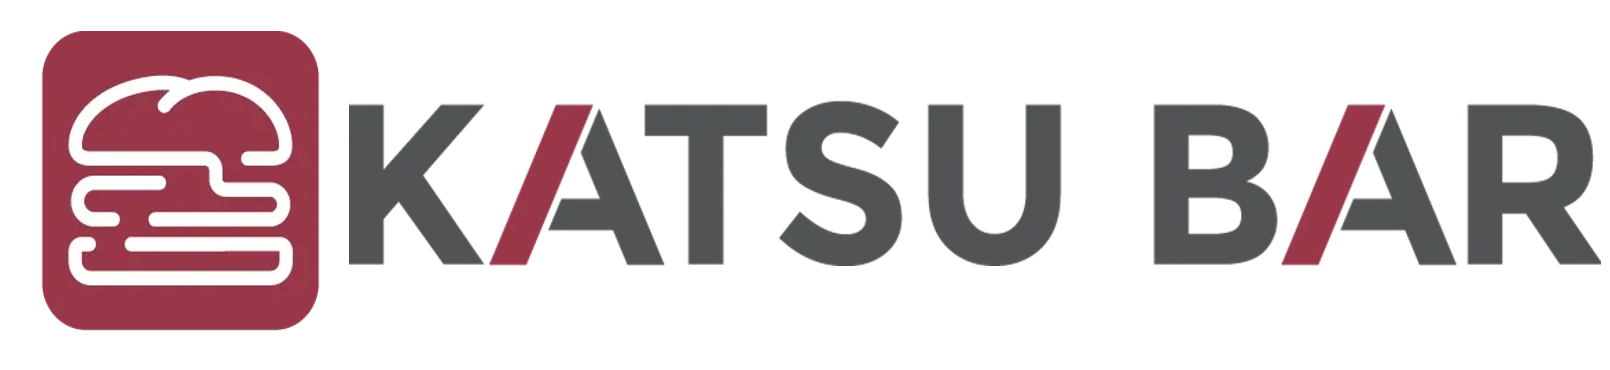 Katsu Bar logo